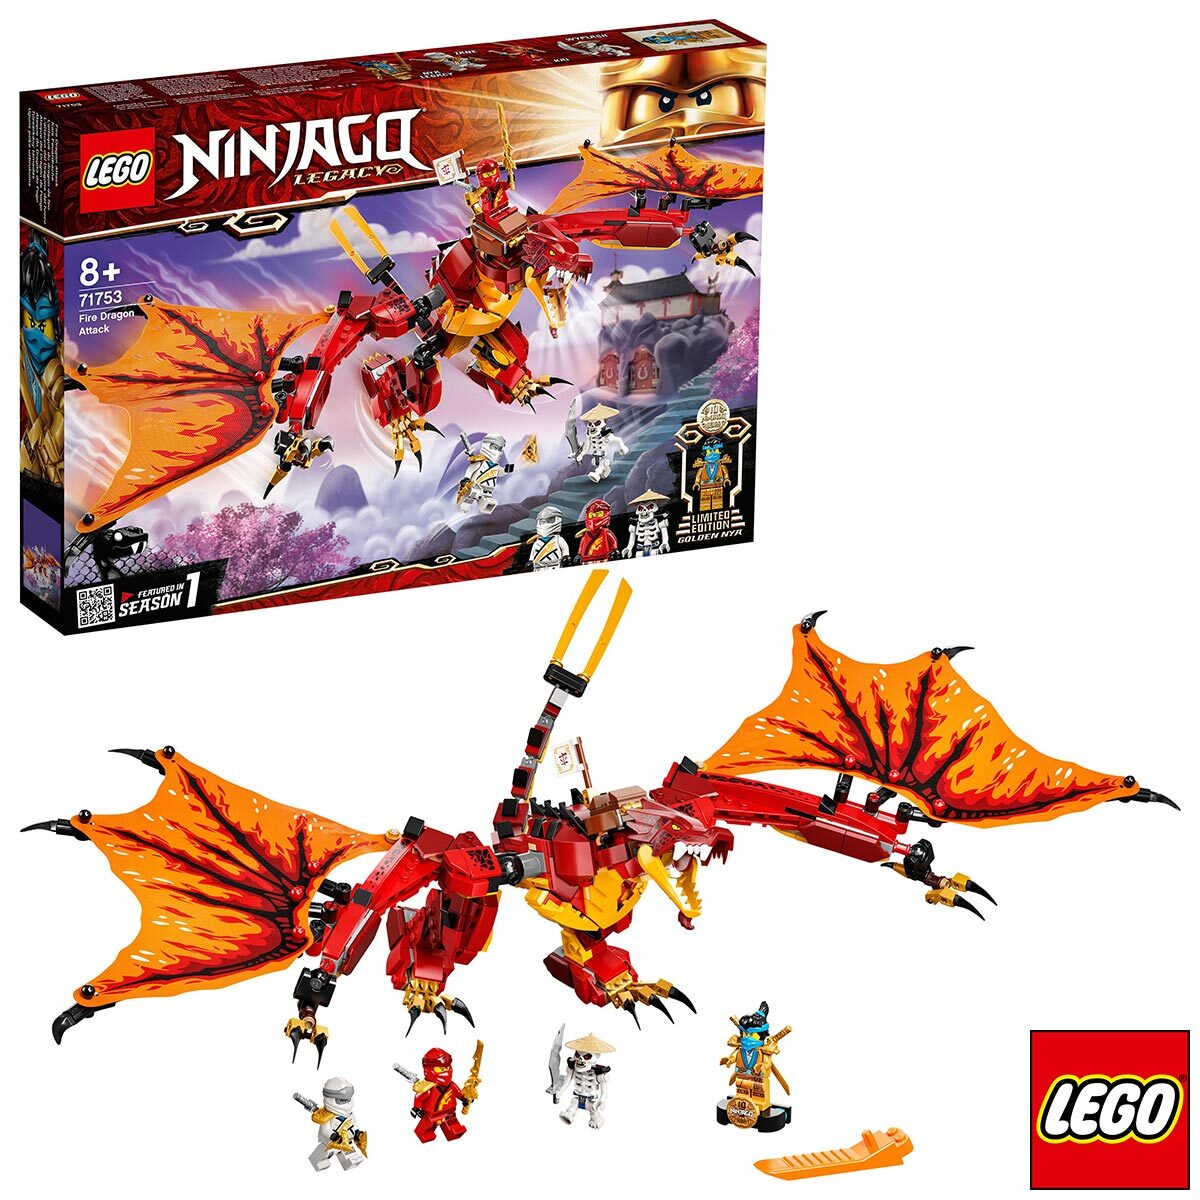 Buy LEGO Ninjago Fire Dragon Attack Image at costco.co.uk